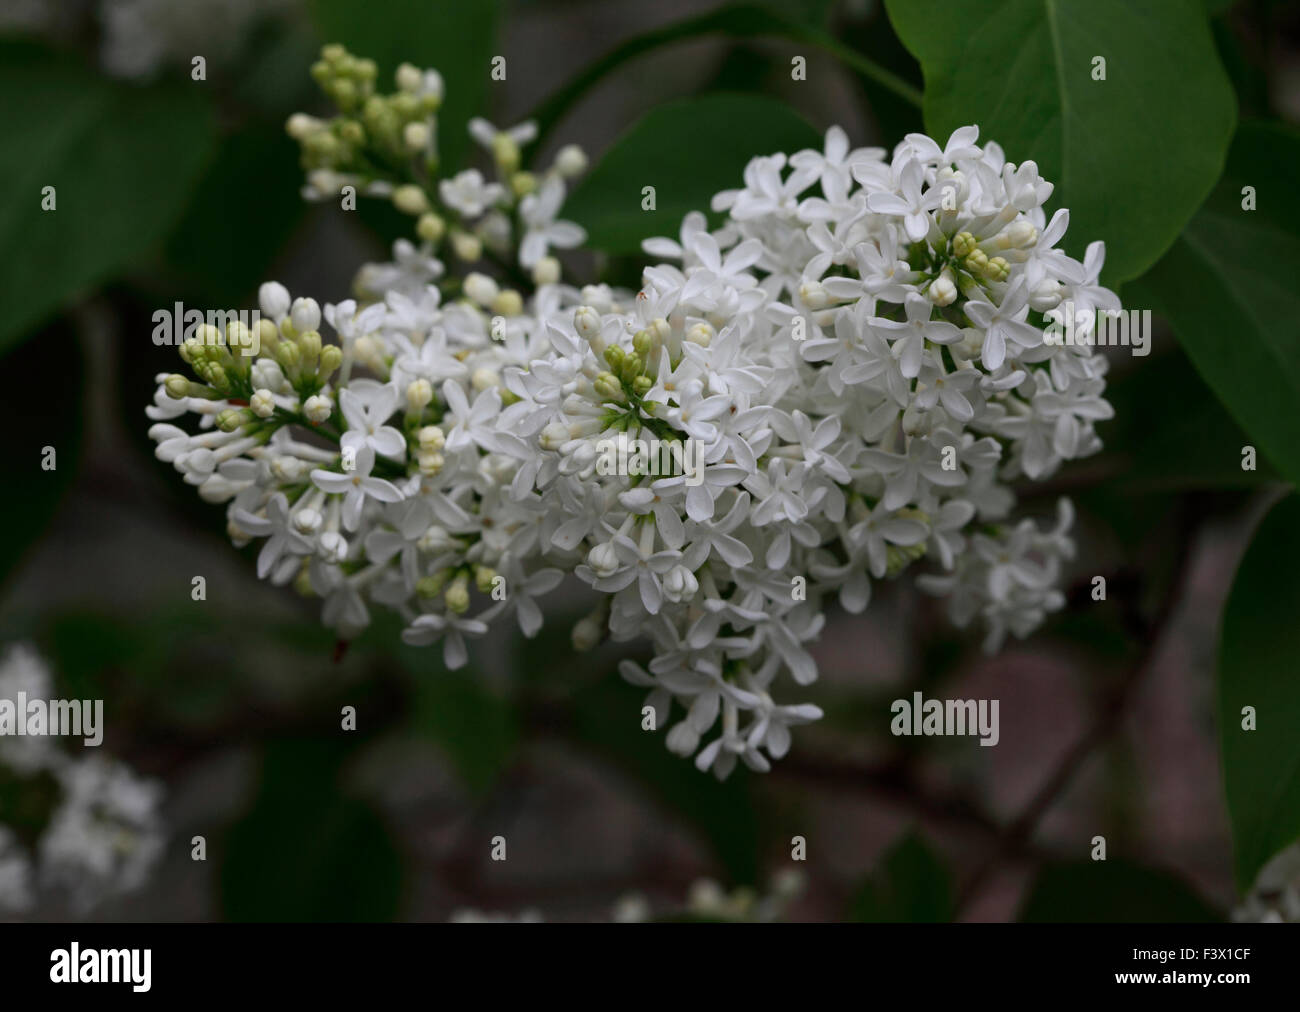 Syringa vulgaris 'Mme Lemoine' Lilac close up of flowers Stock Photo